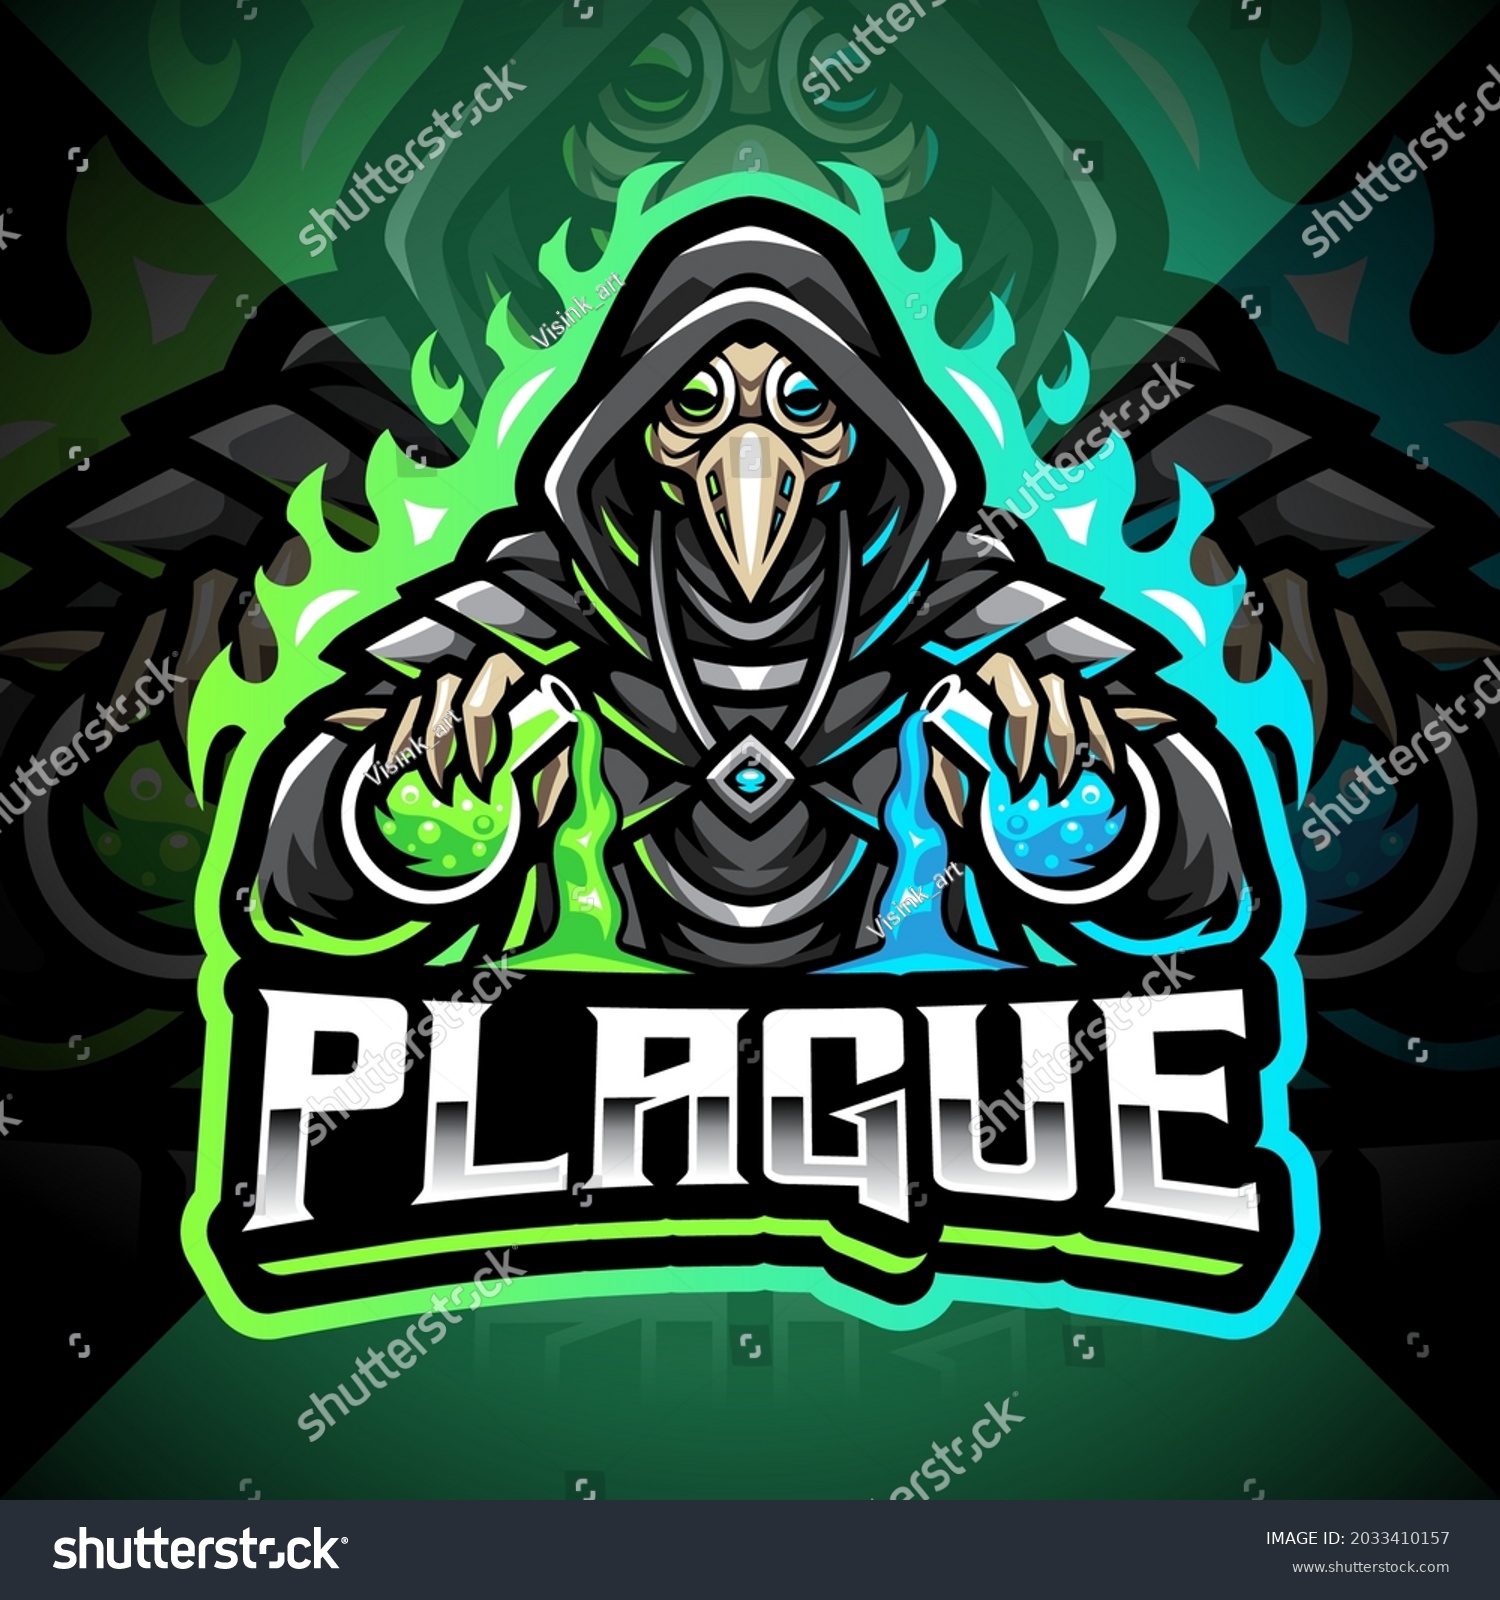 SVG of Plague doctor esport mascot logo svg